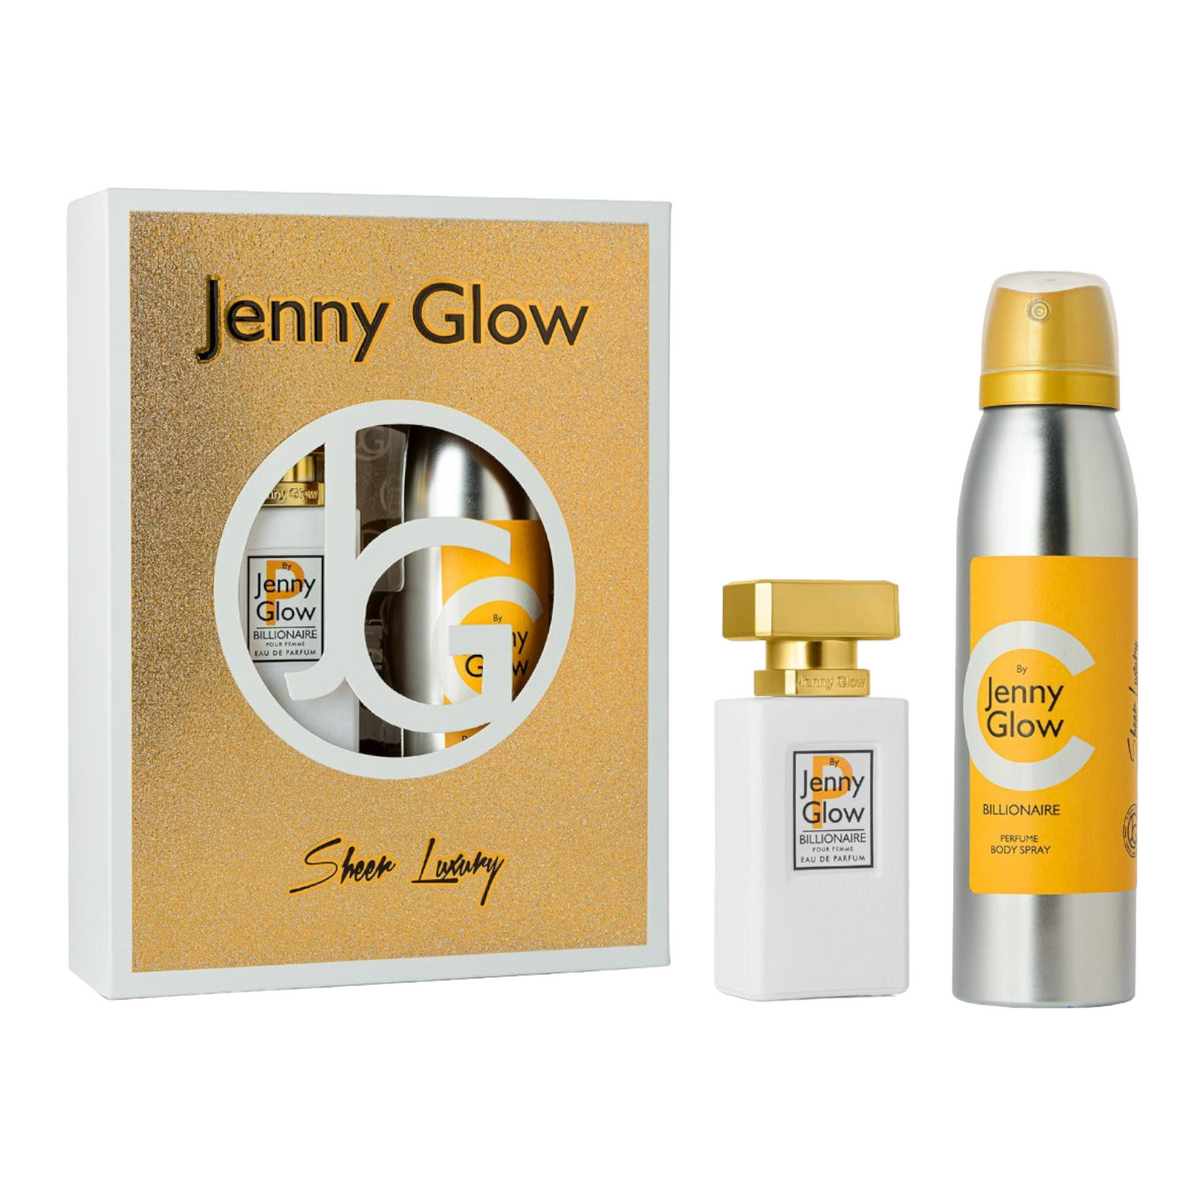 Jenny Glow Perfume & Body Spray Gift Set - Billionaire Femme